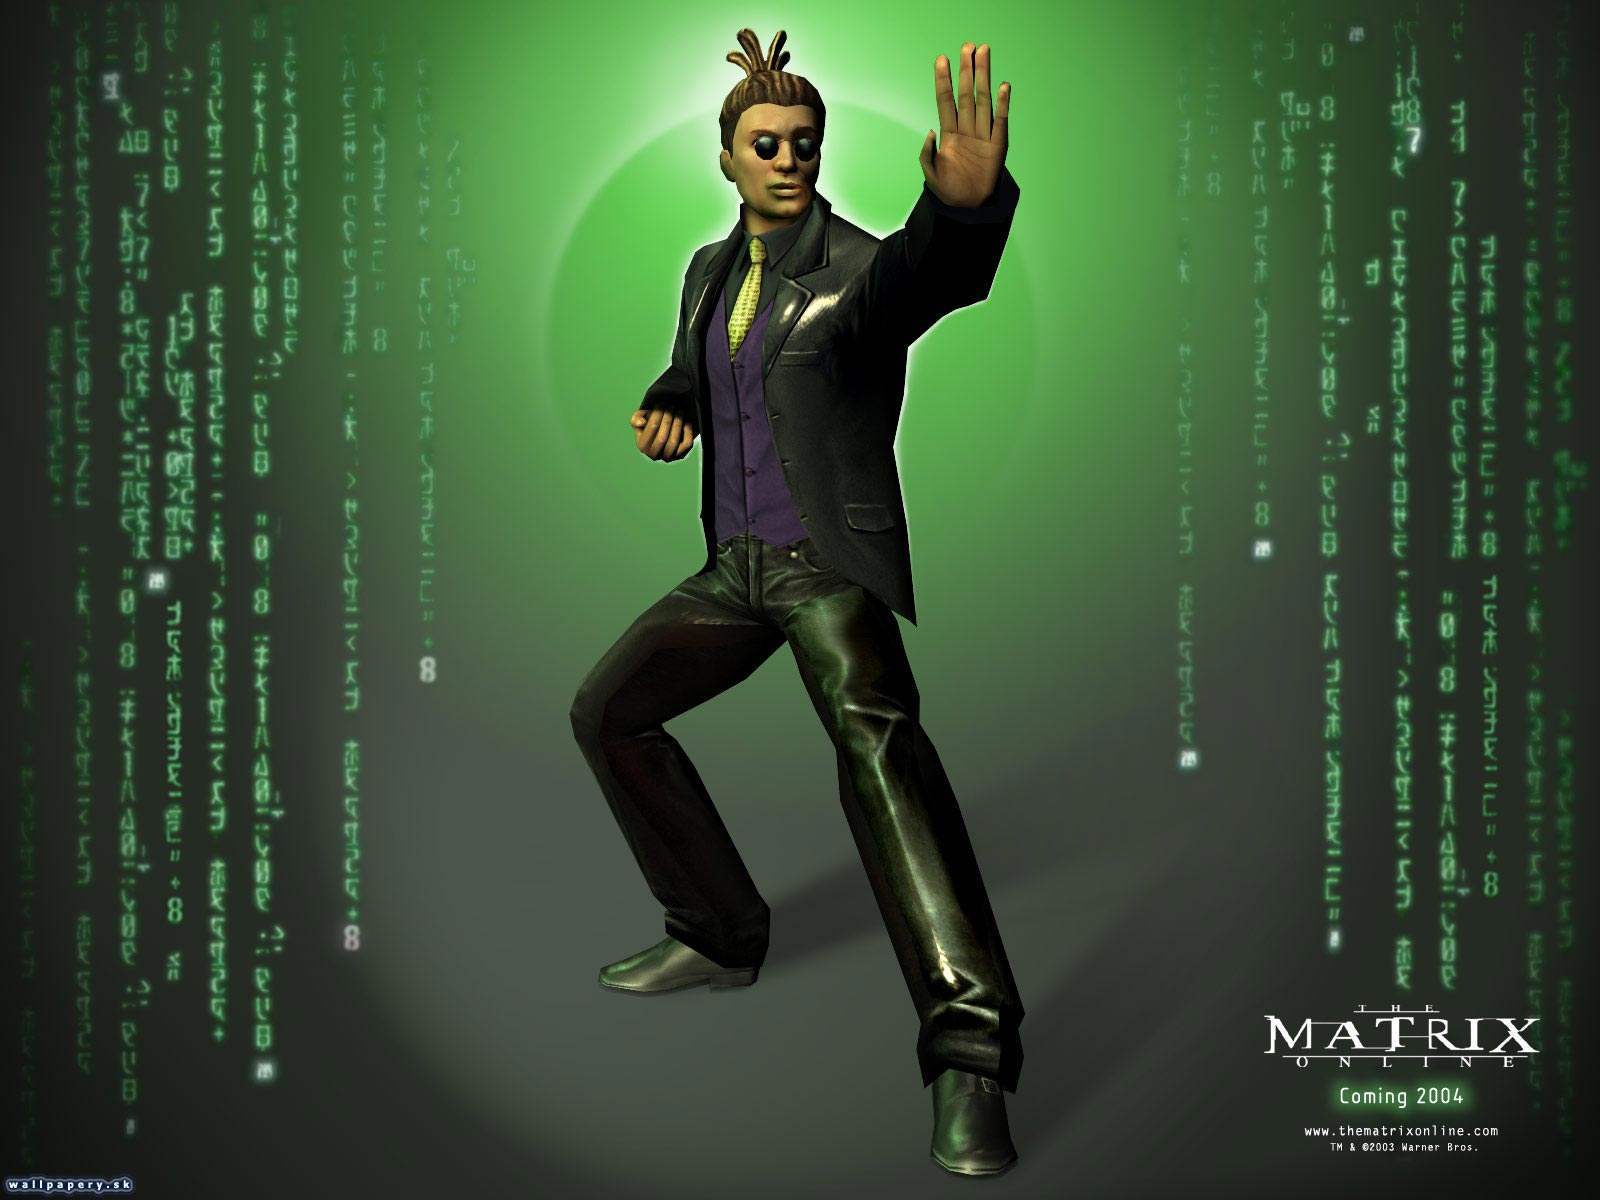 The Matrix Online - wallpaper 2